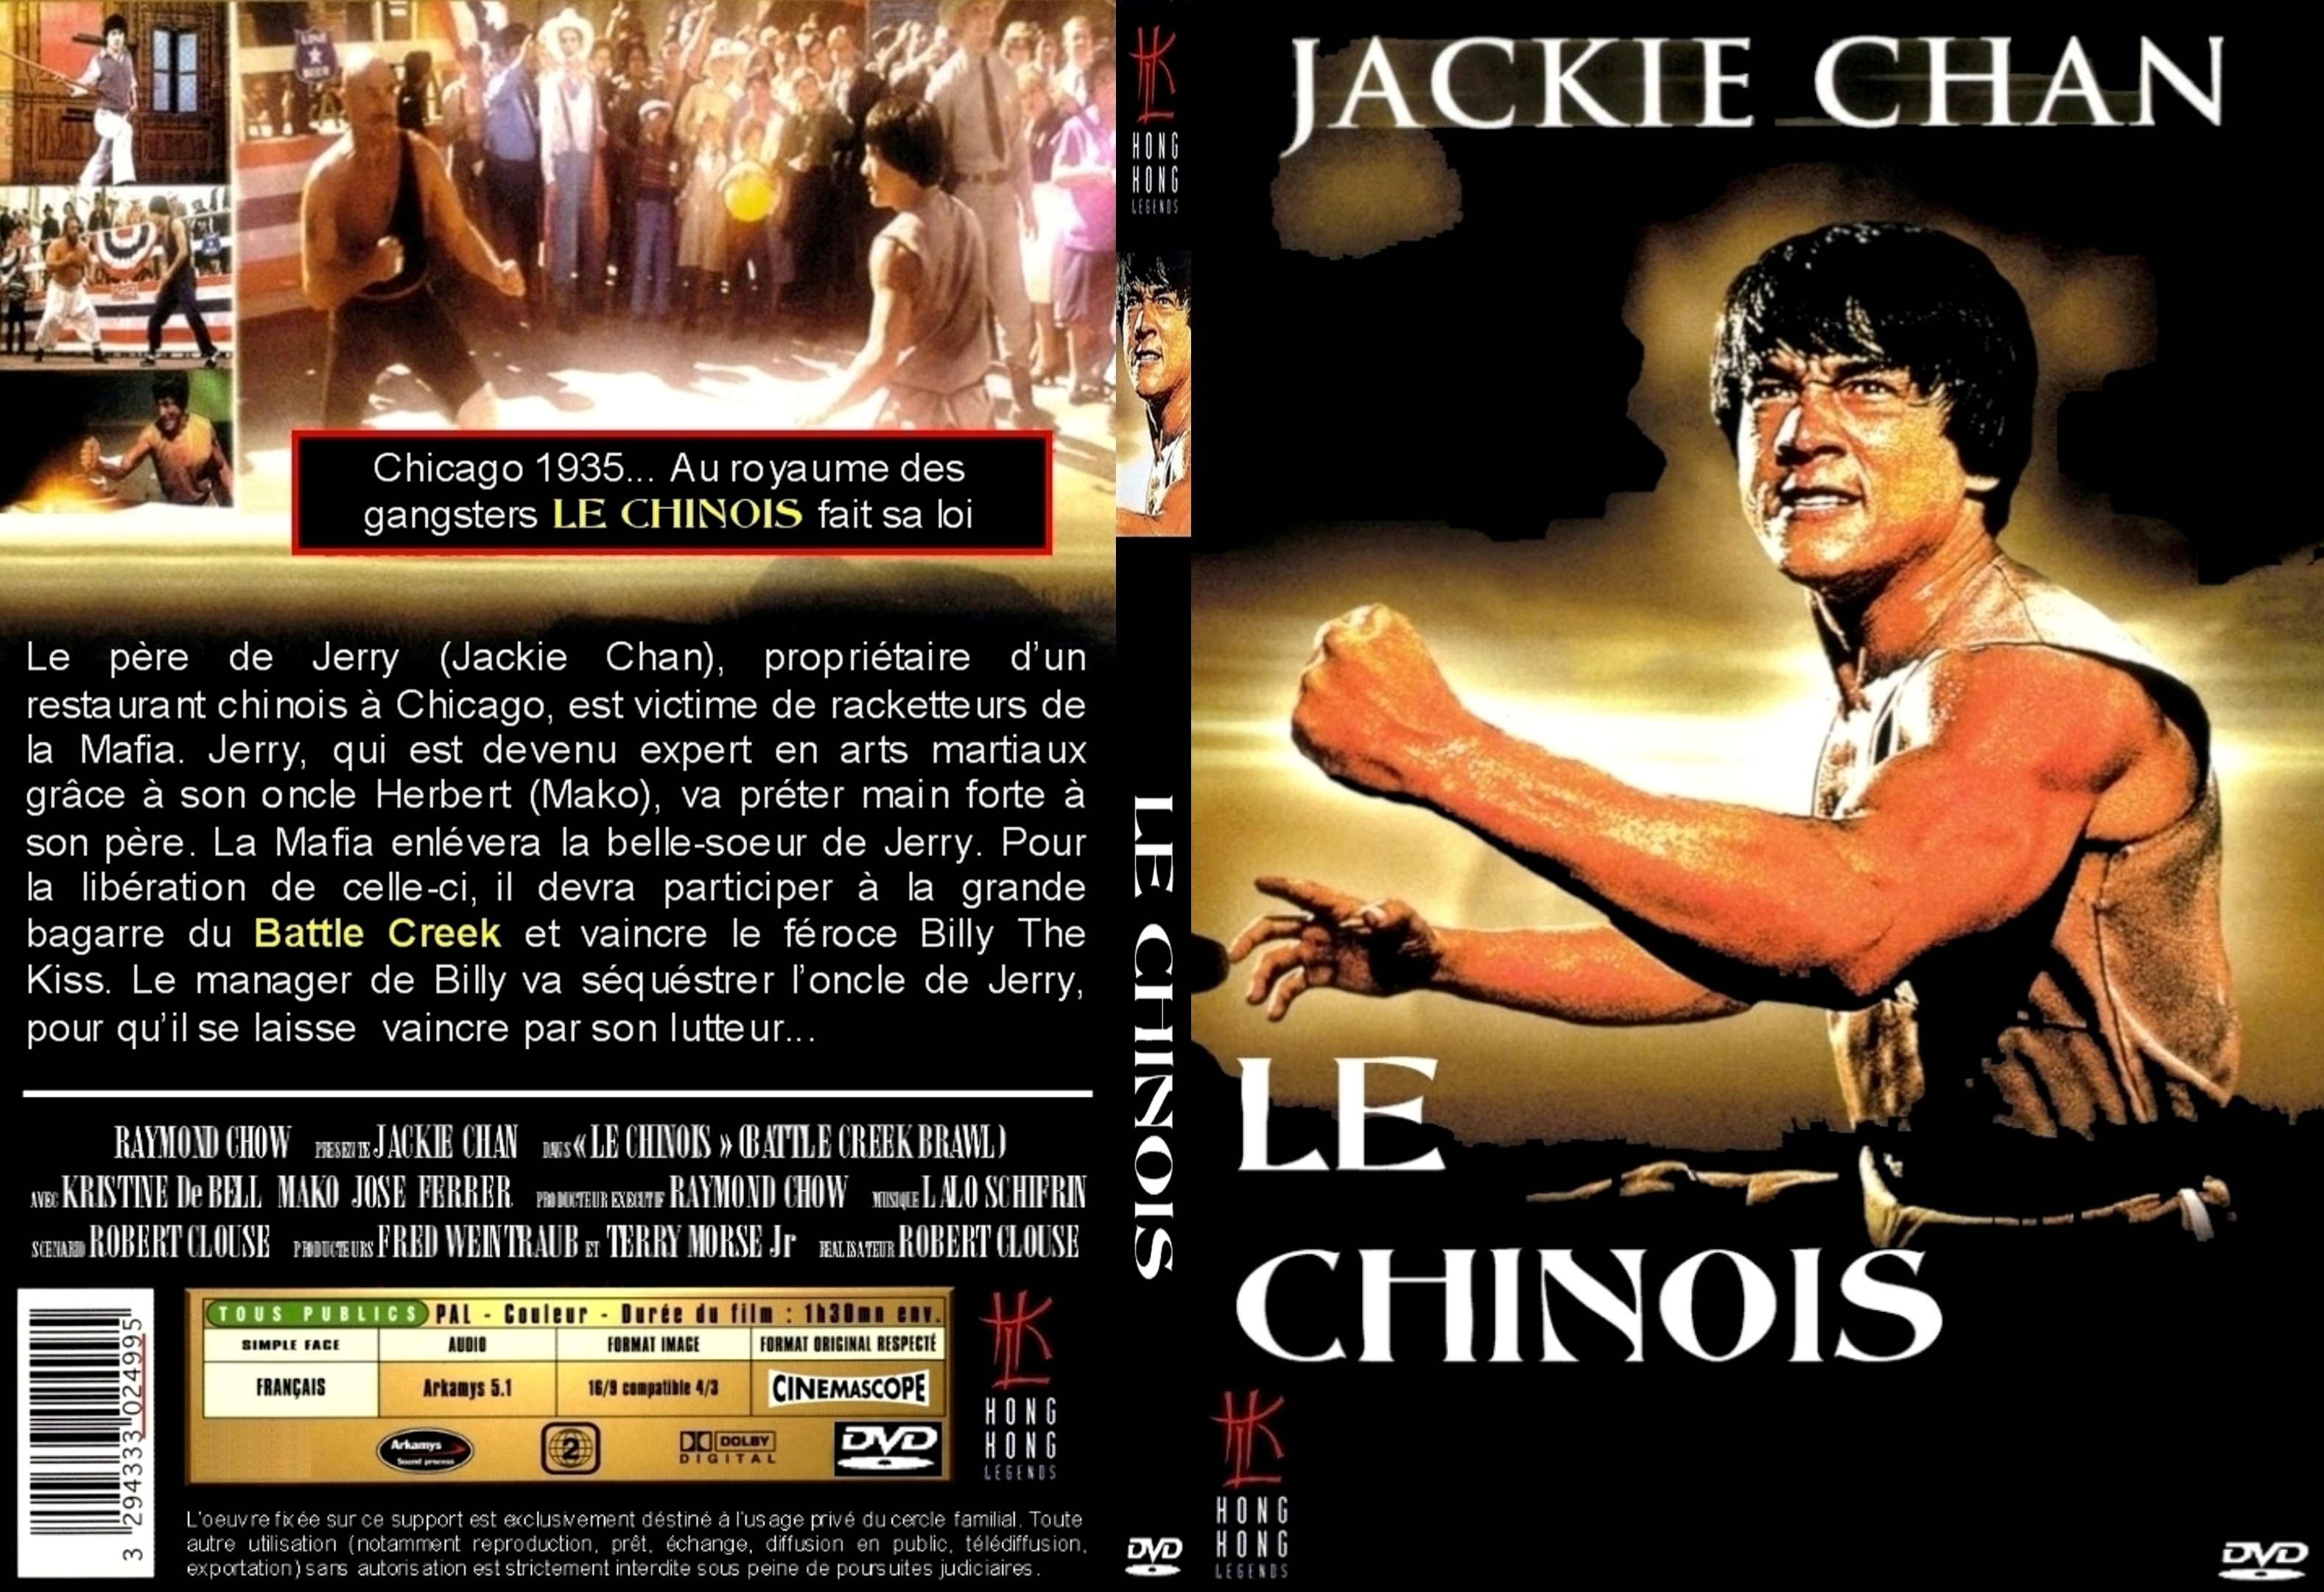 Jaquette DVD Le chinois custom - SLIM v2